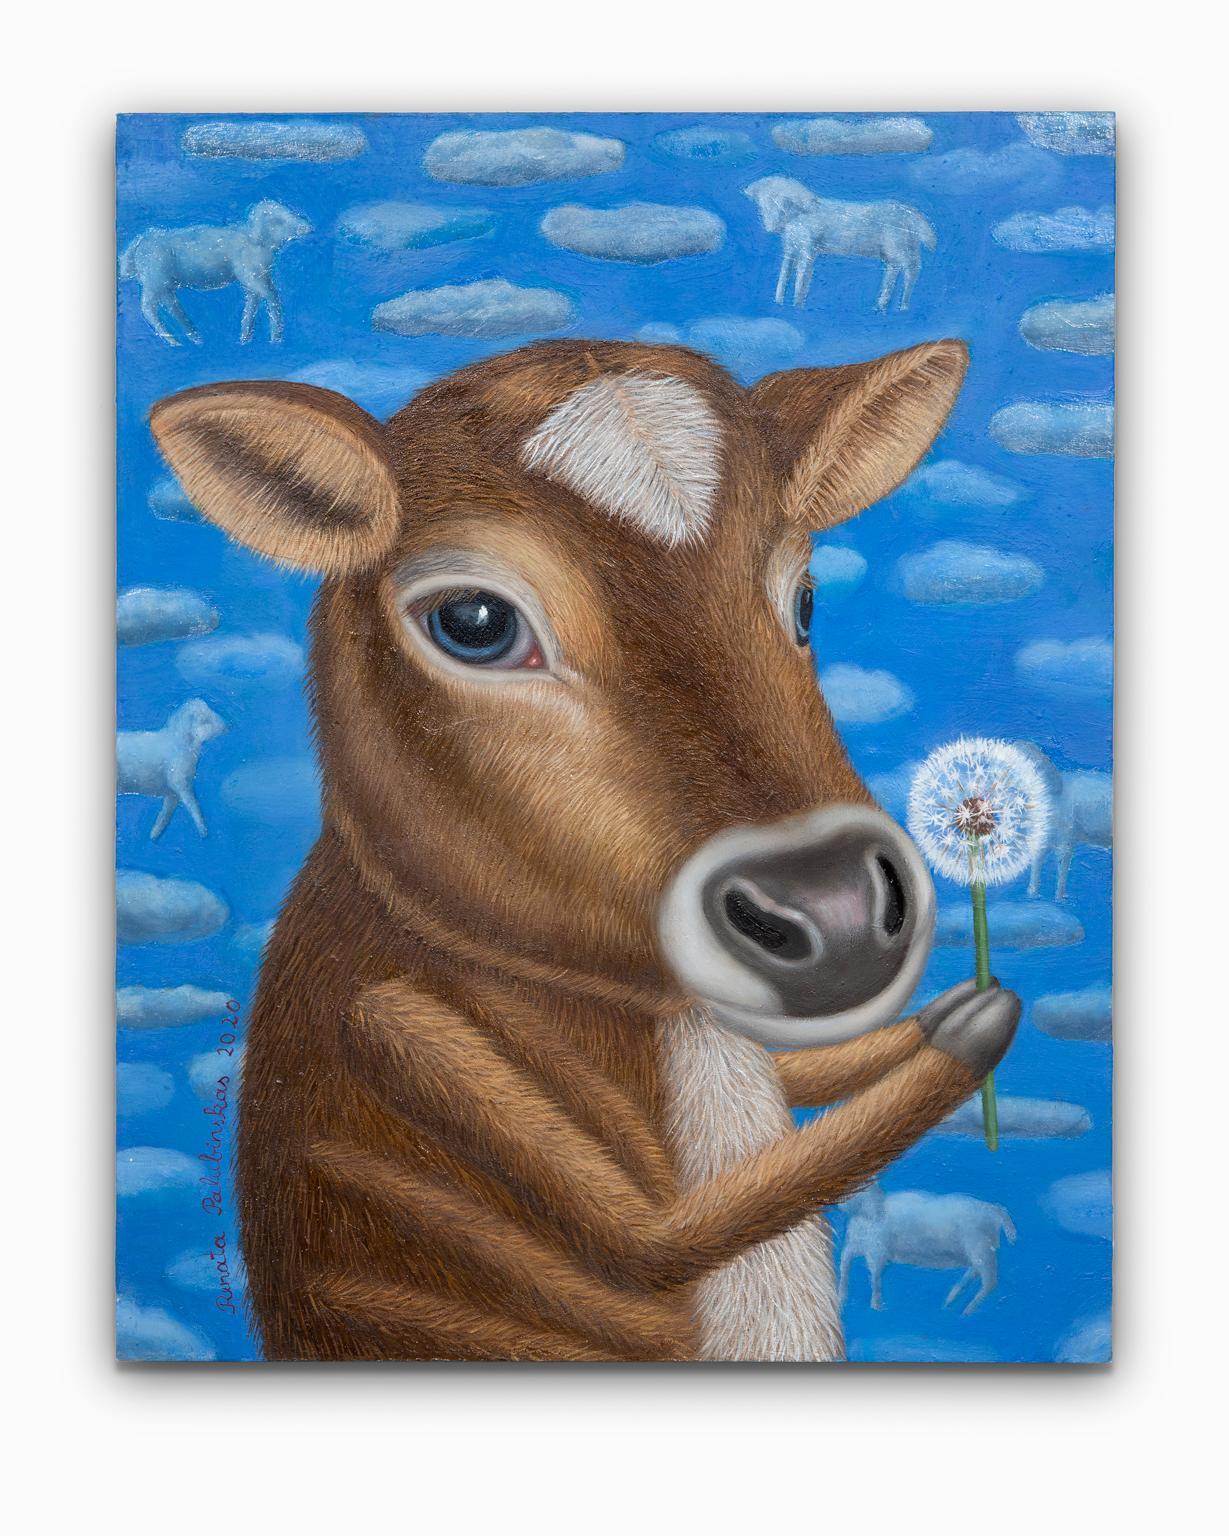 Renata Palubinskas Animal Painting - "Cow", Oil on Canvas